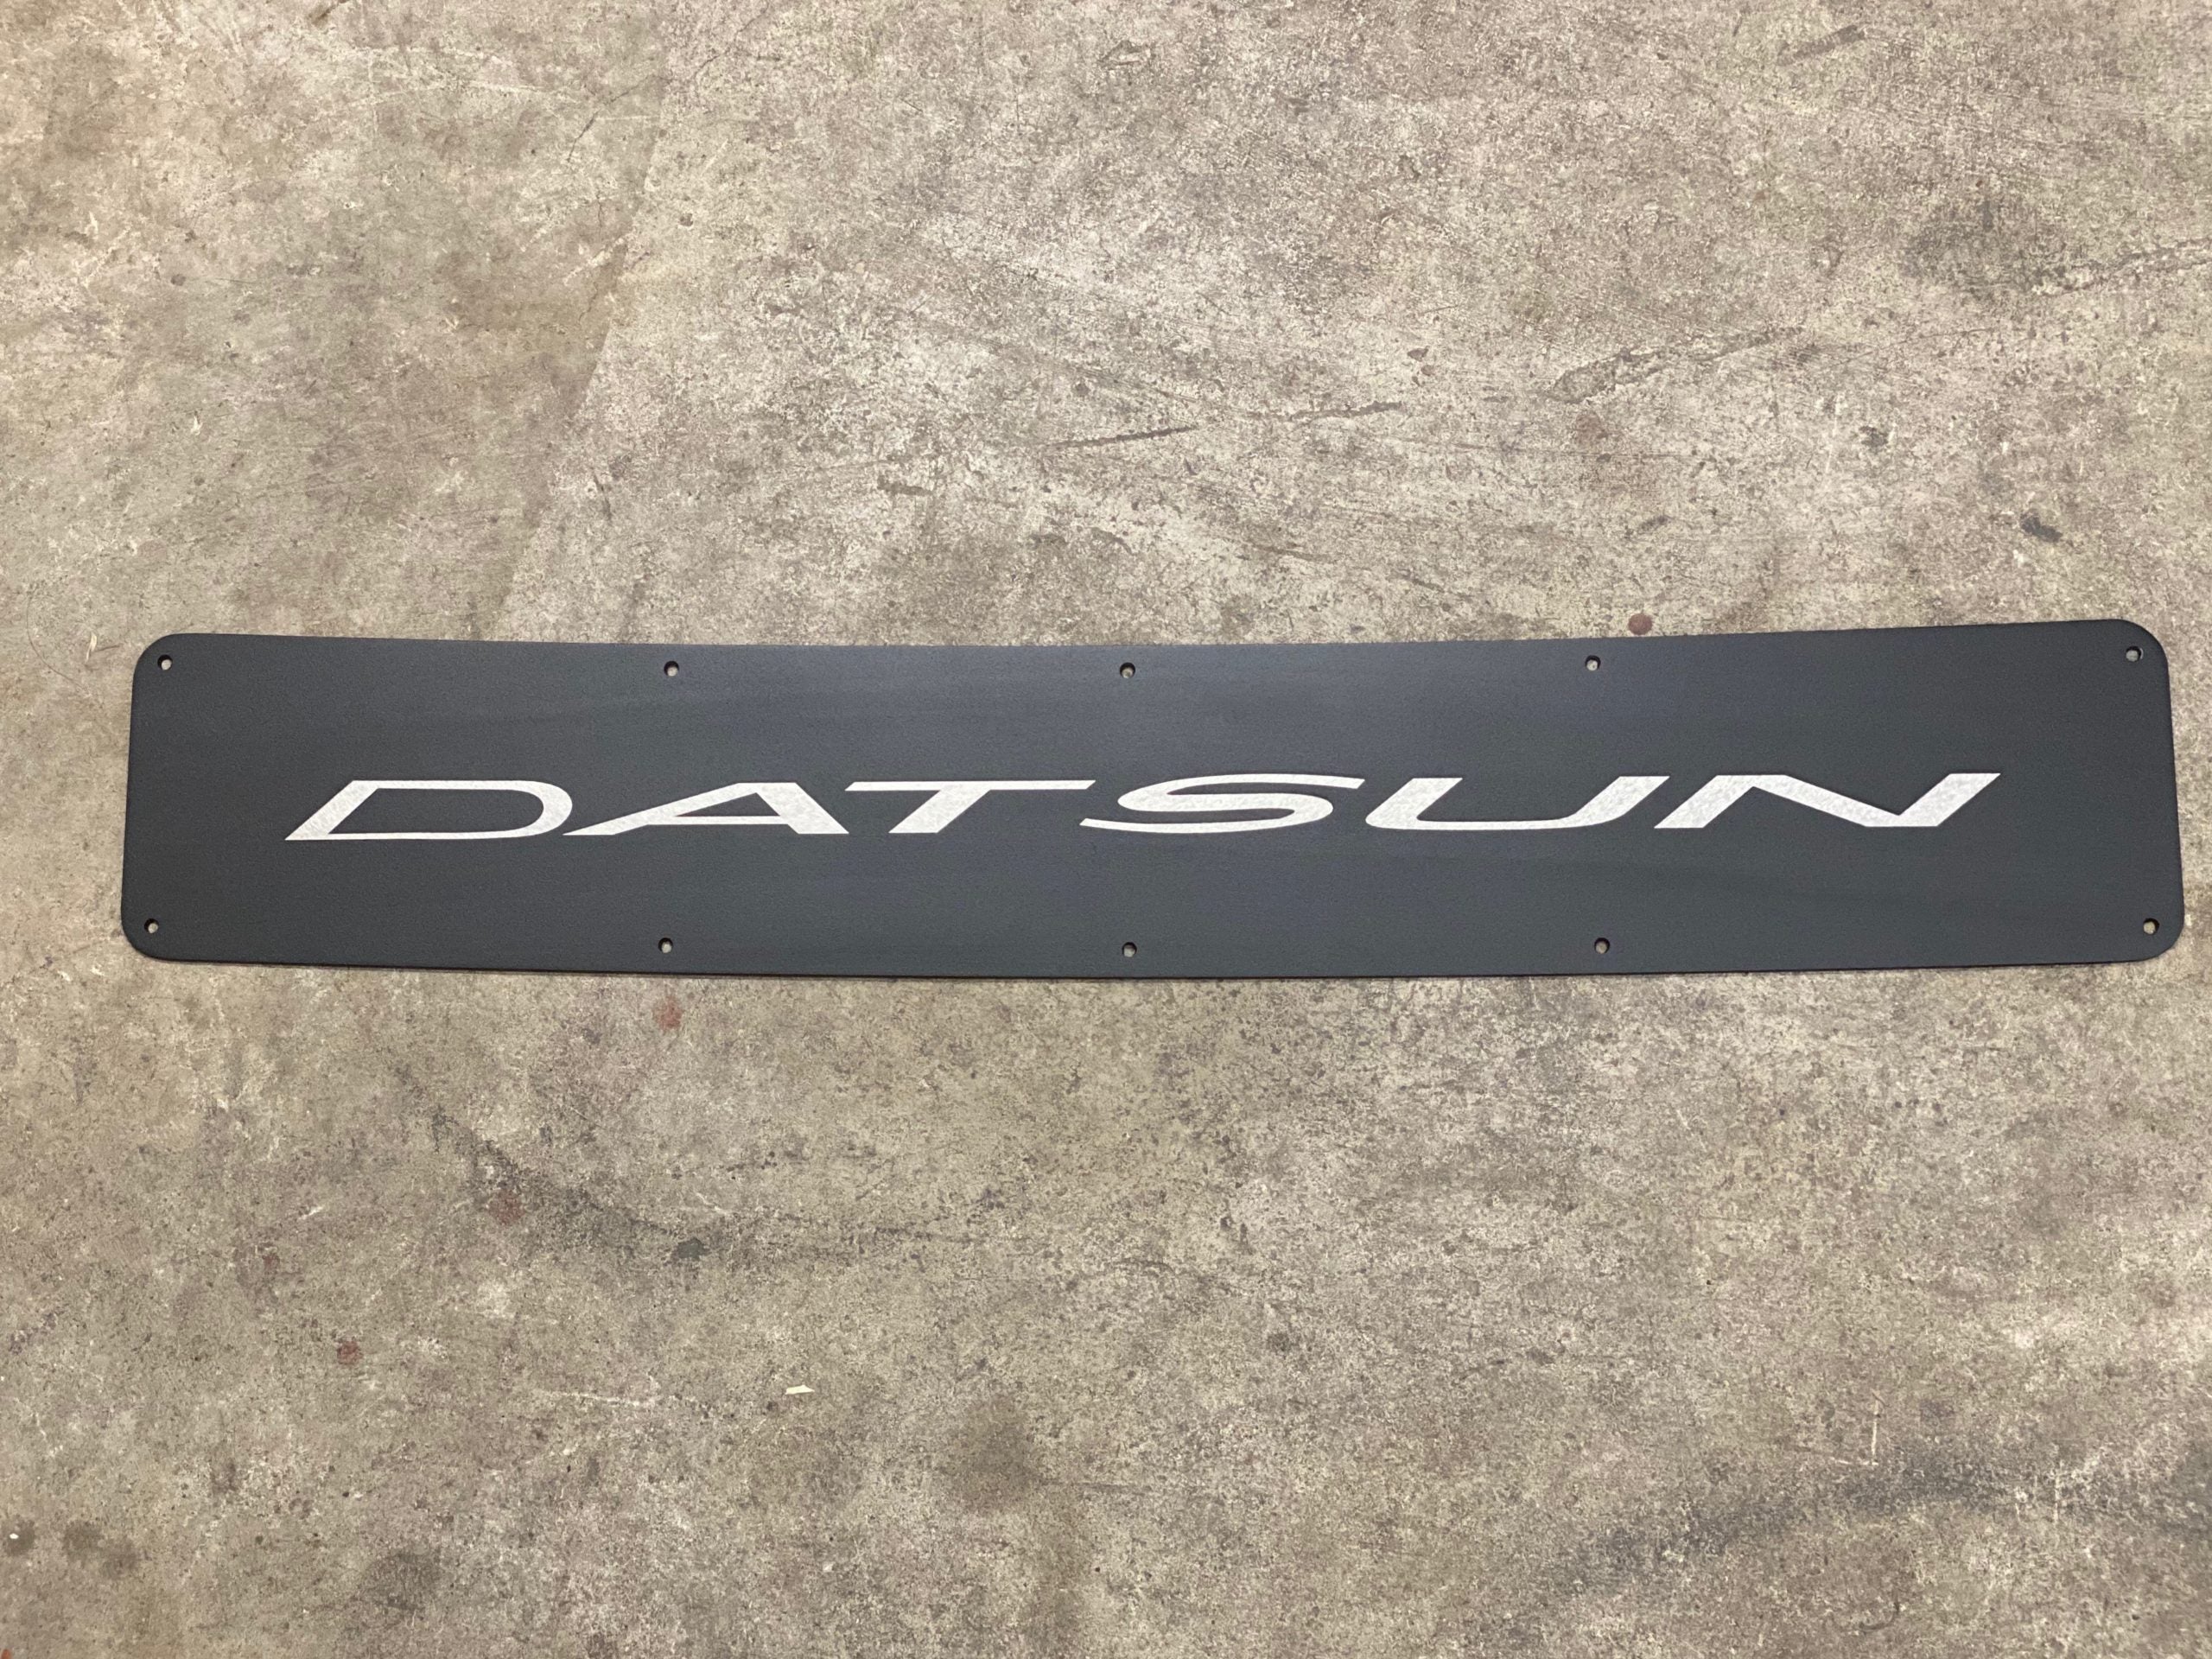 Deck Lid Plate - DATSUN engraving